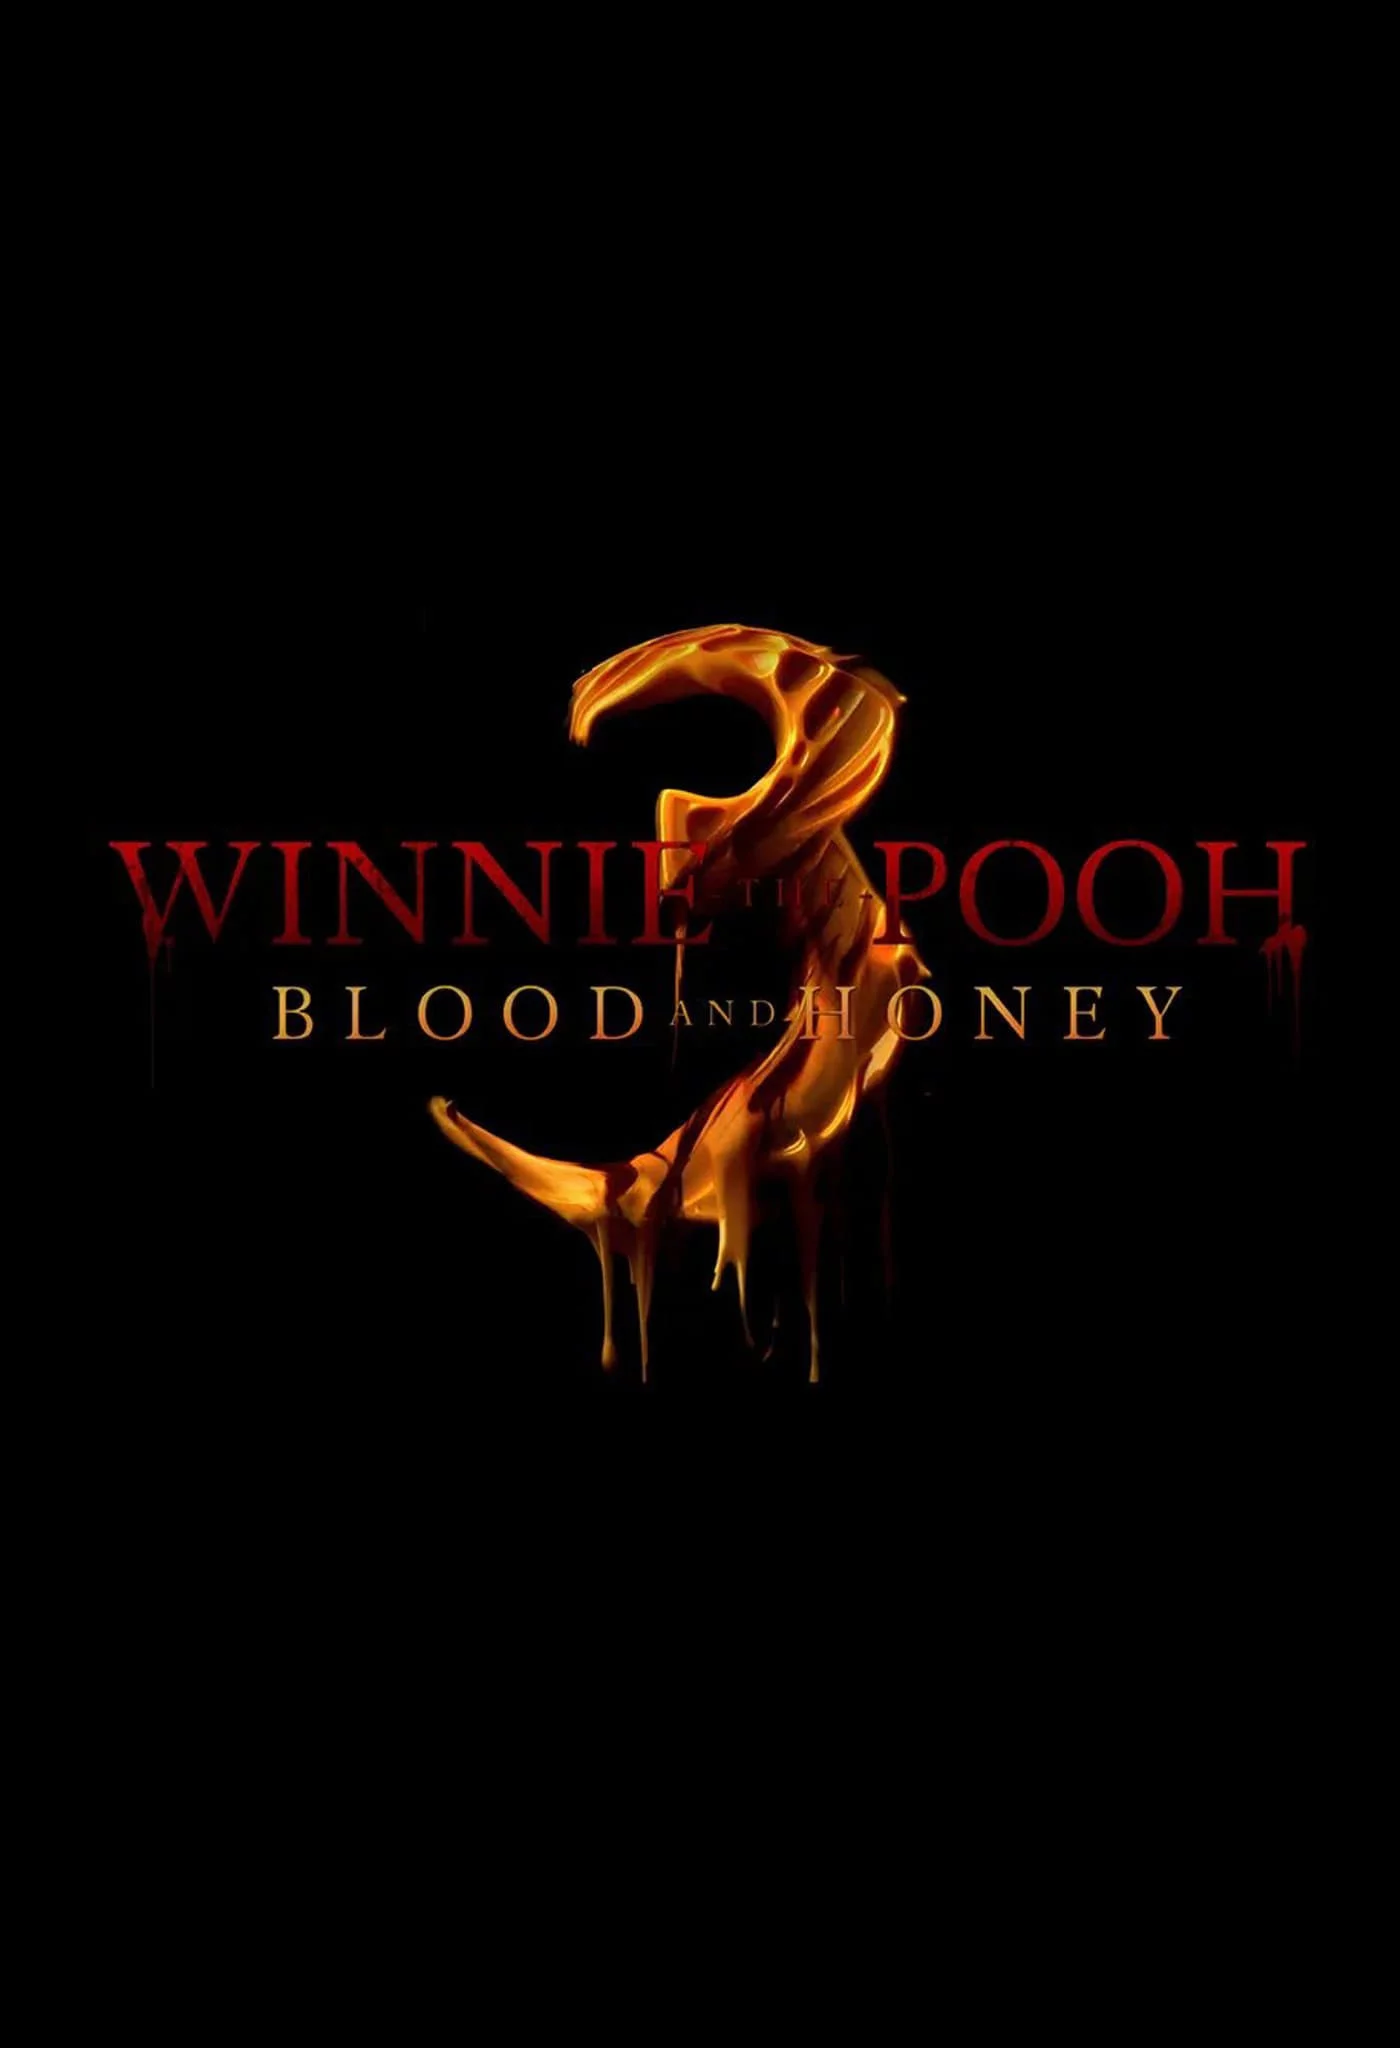 Photo 5 du film : Winnie the Pooh: Blood and Honey 3